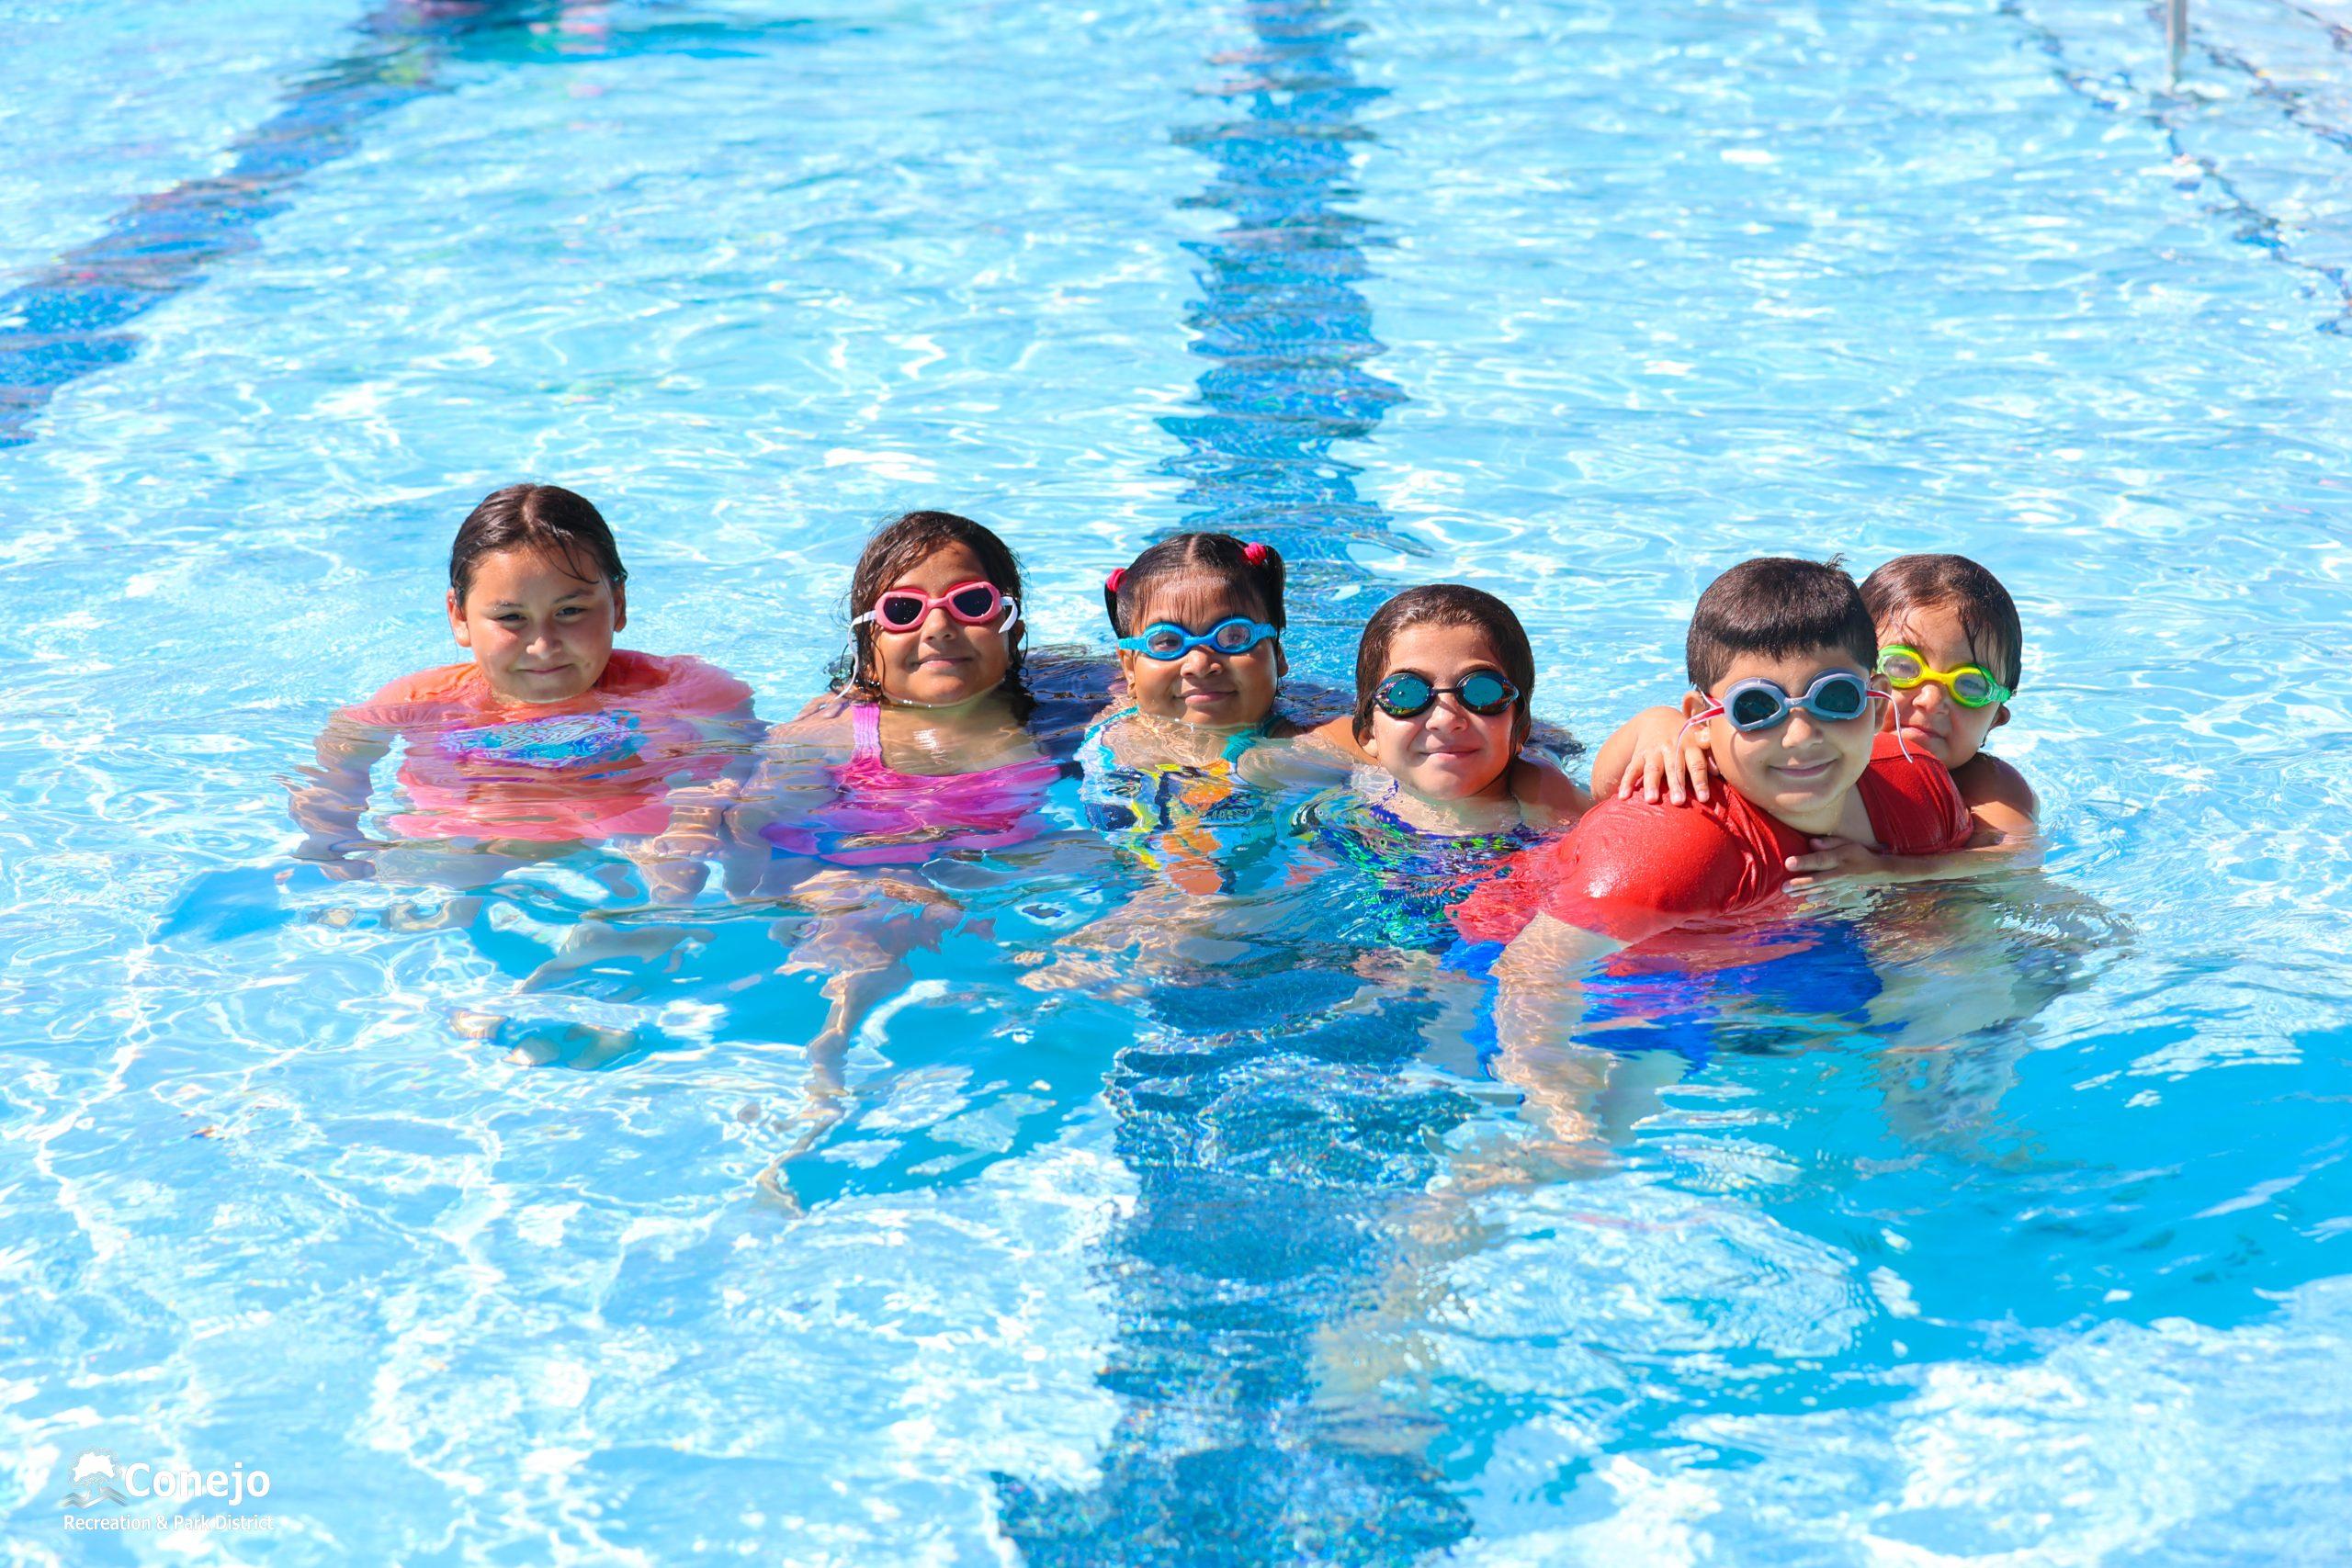 Children in swimming pool.